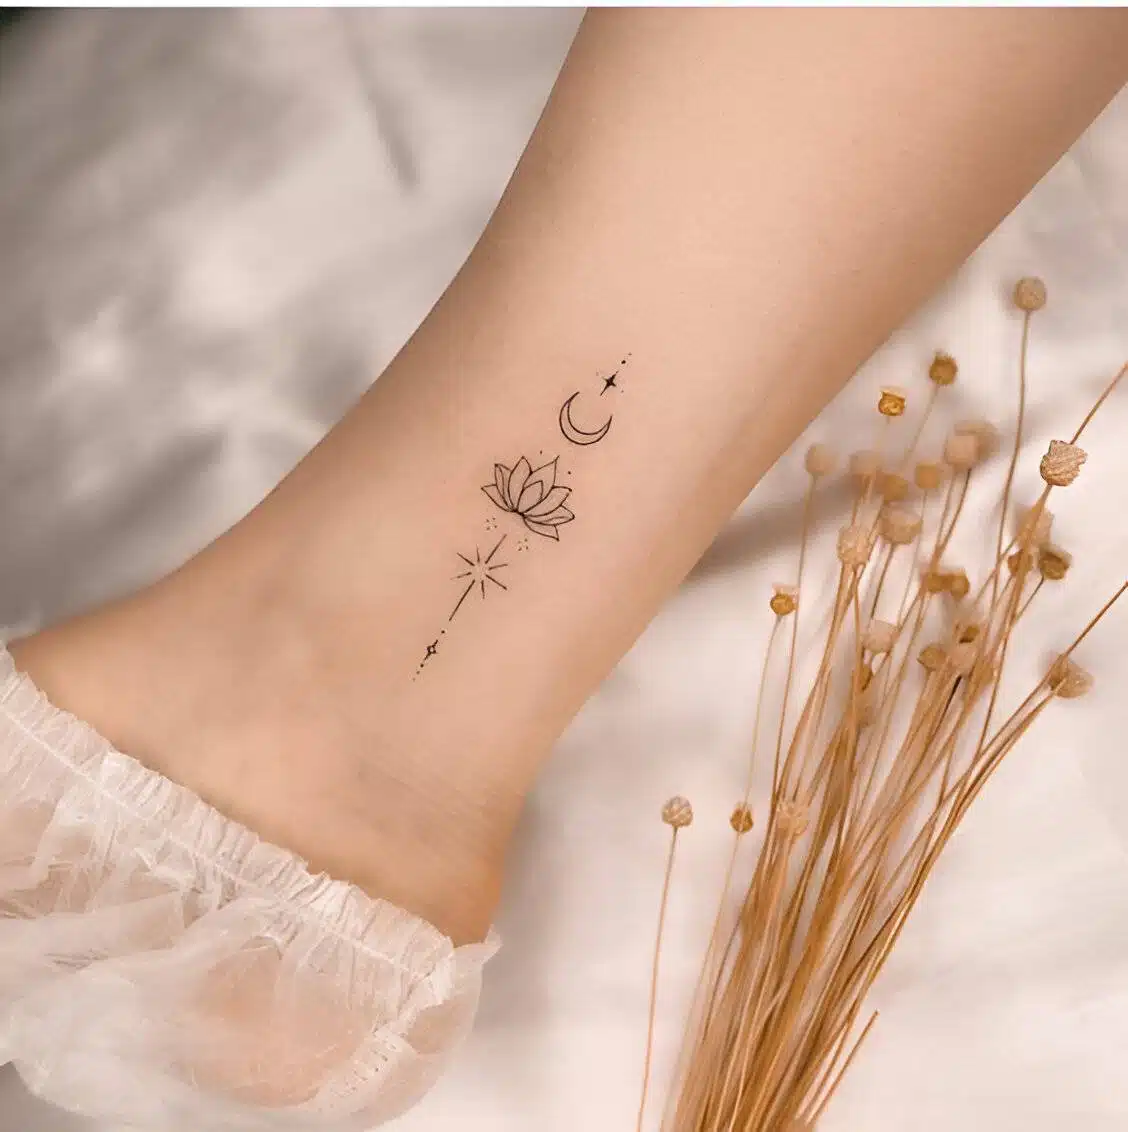 25 Feminine Tattoo Ideas That Are Small But Oh So Pretty - 211